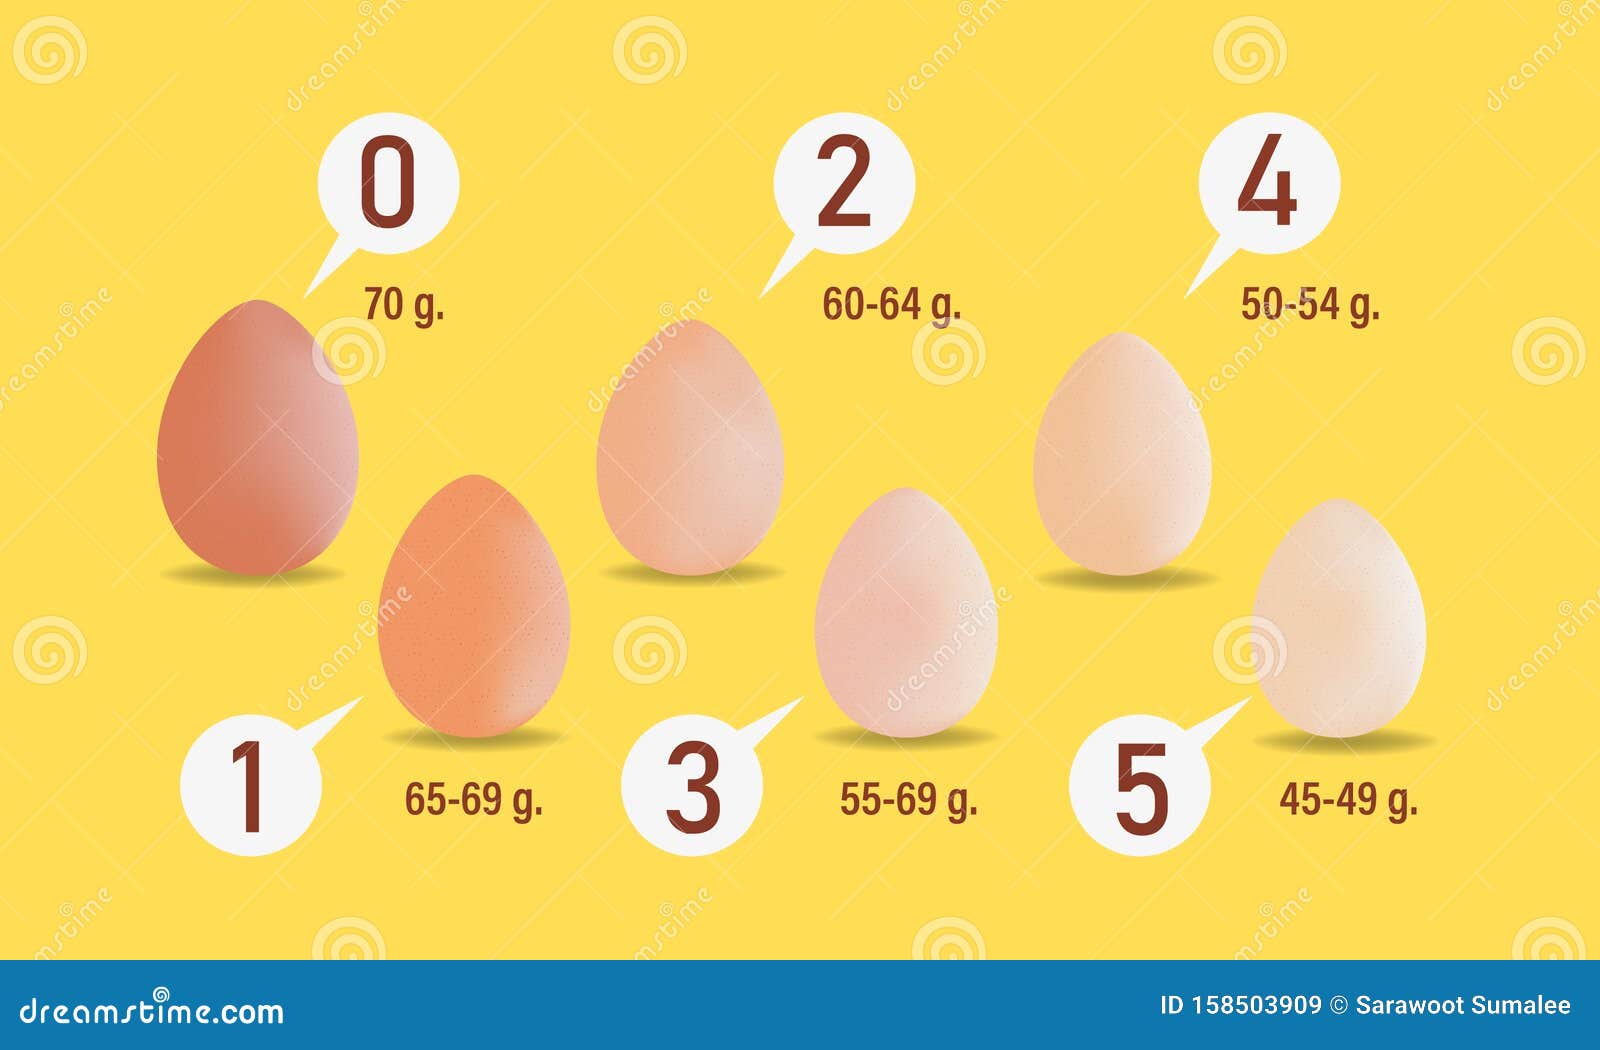 Размер яиц кур. Размер куриного яйца с1. Диаметр куриного яйца с1. Размер яйца курицы. Яйцо Размеры стандарт.